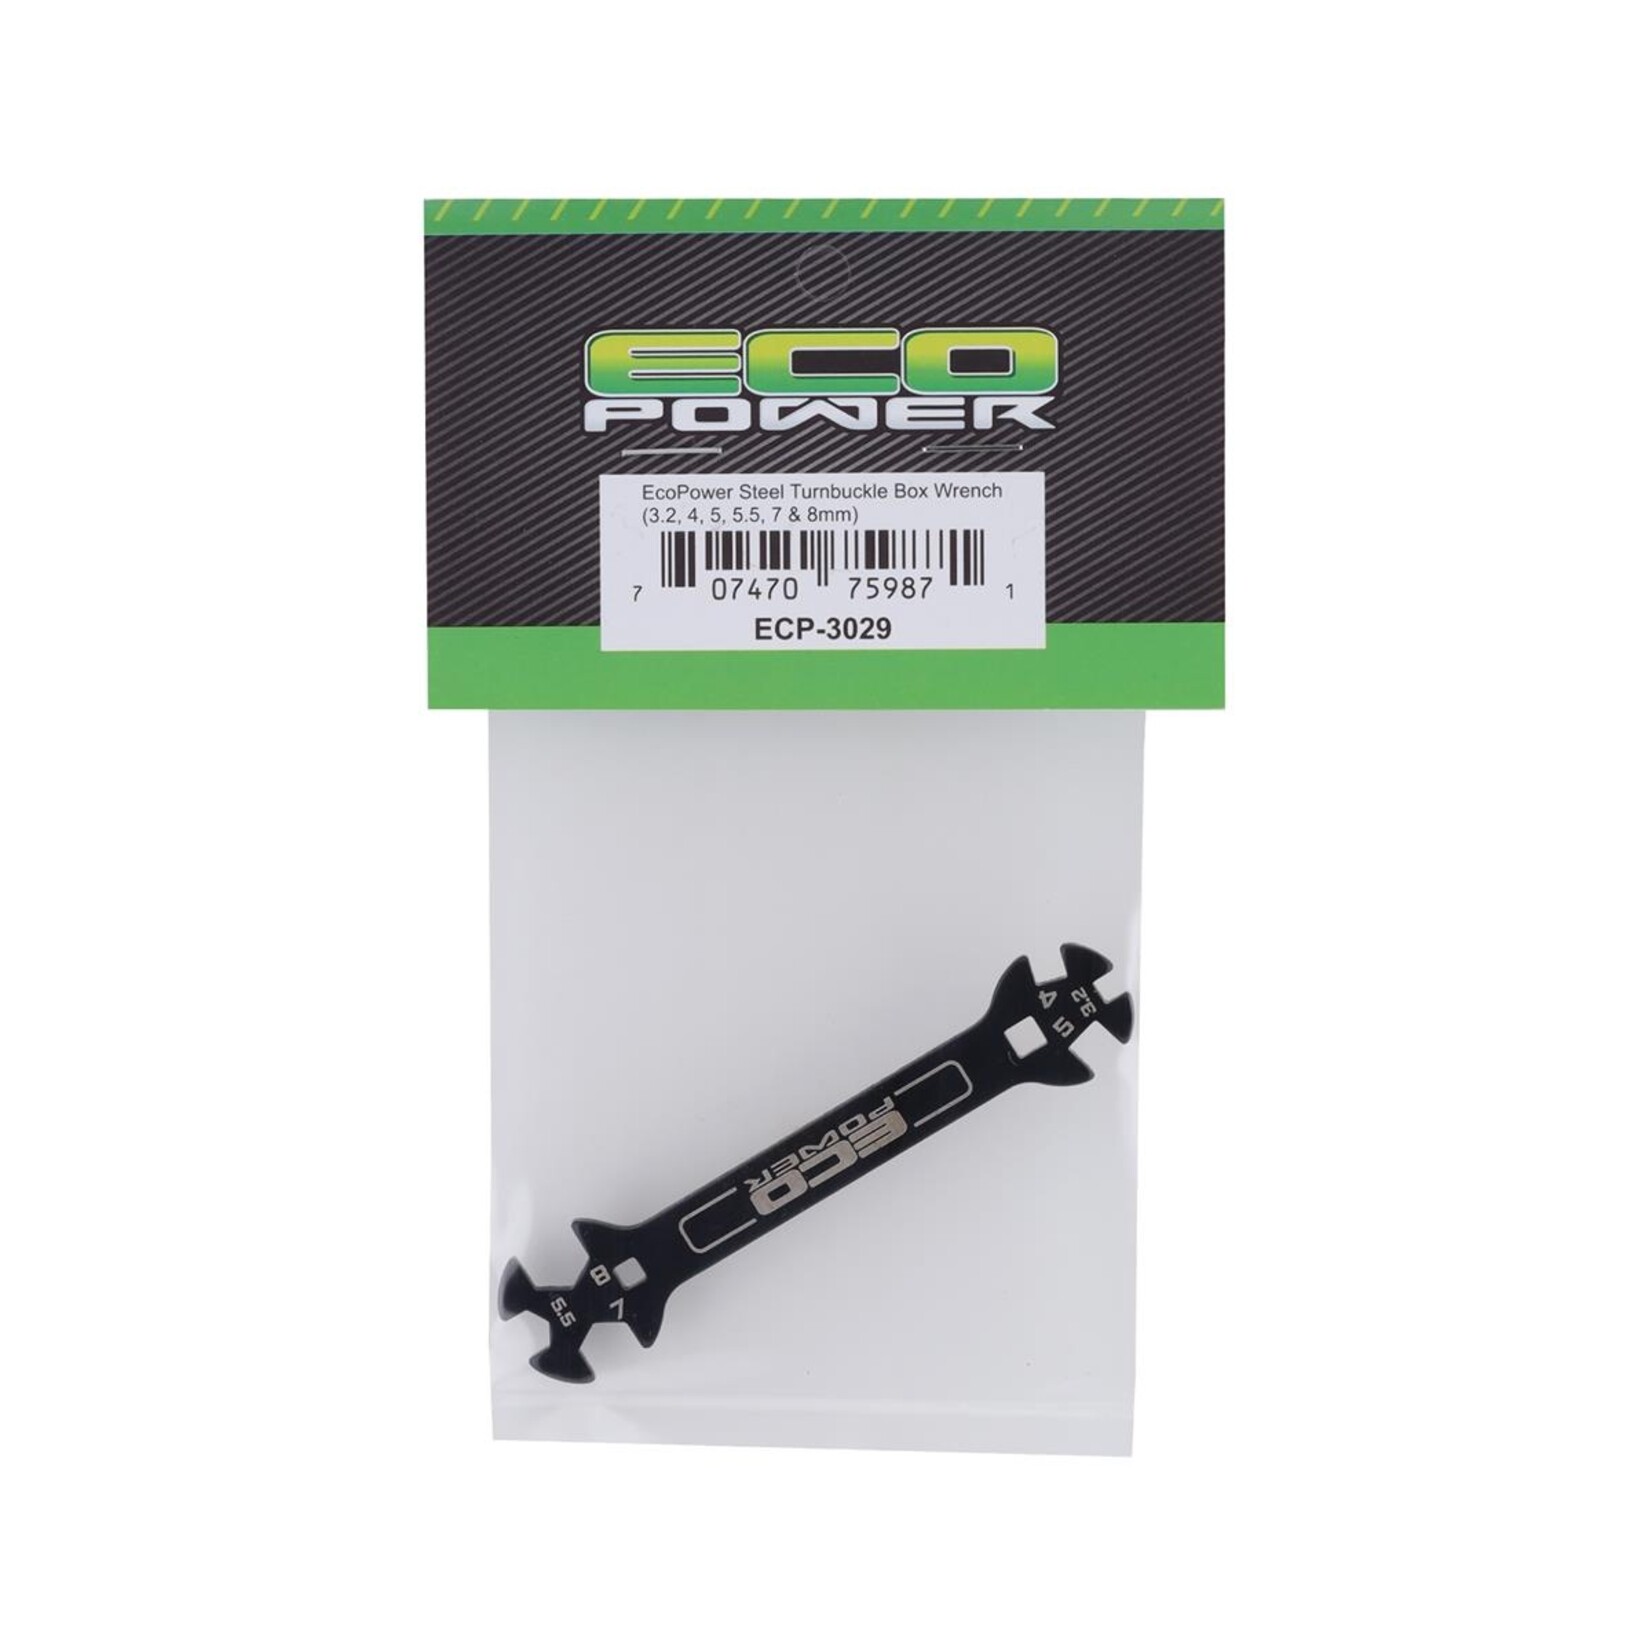 EcoPower EcoPower Steel Turnbuckle Box Wrench (3.2, 4, 5, 5.5, 7 & 8mm) #ECP-3029